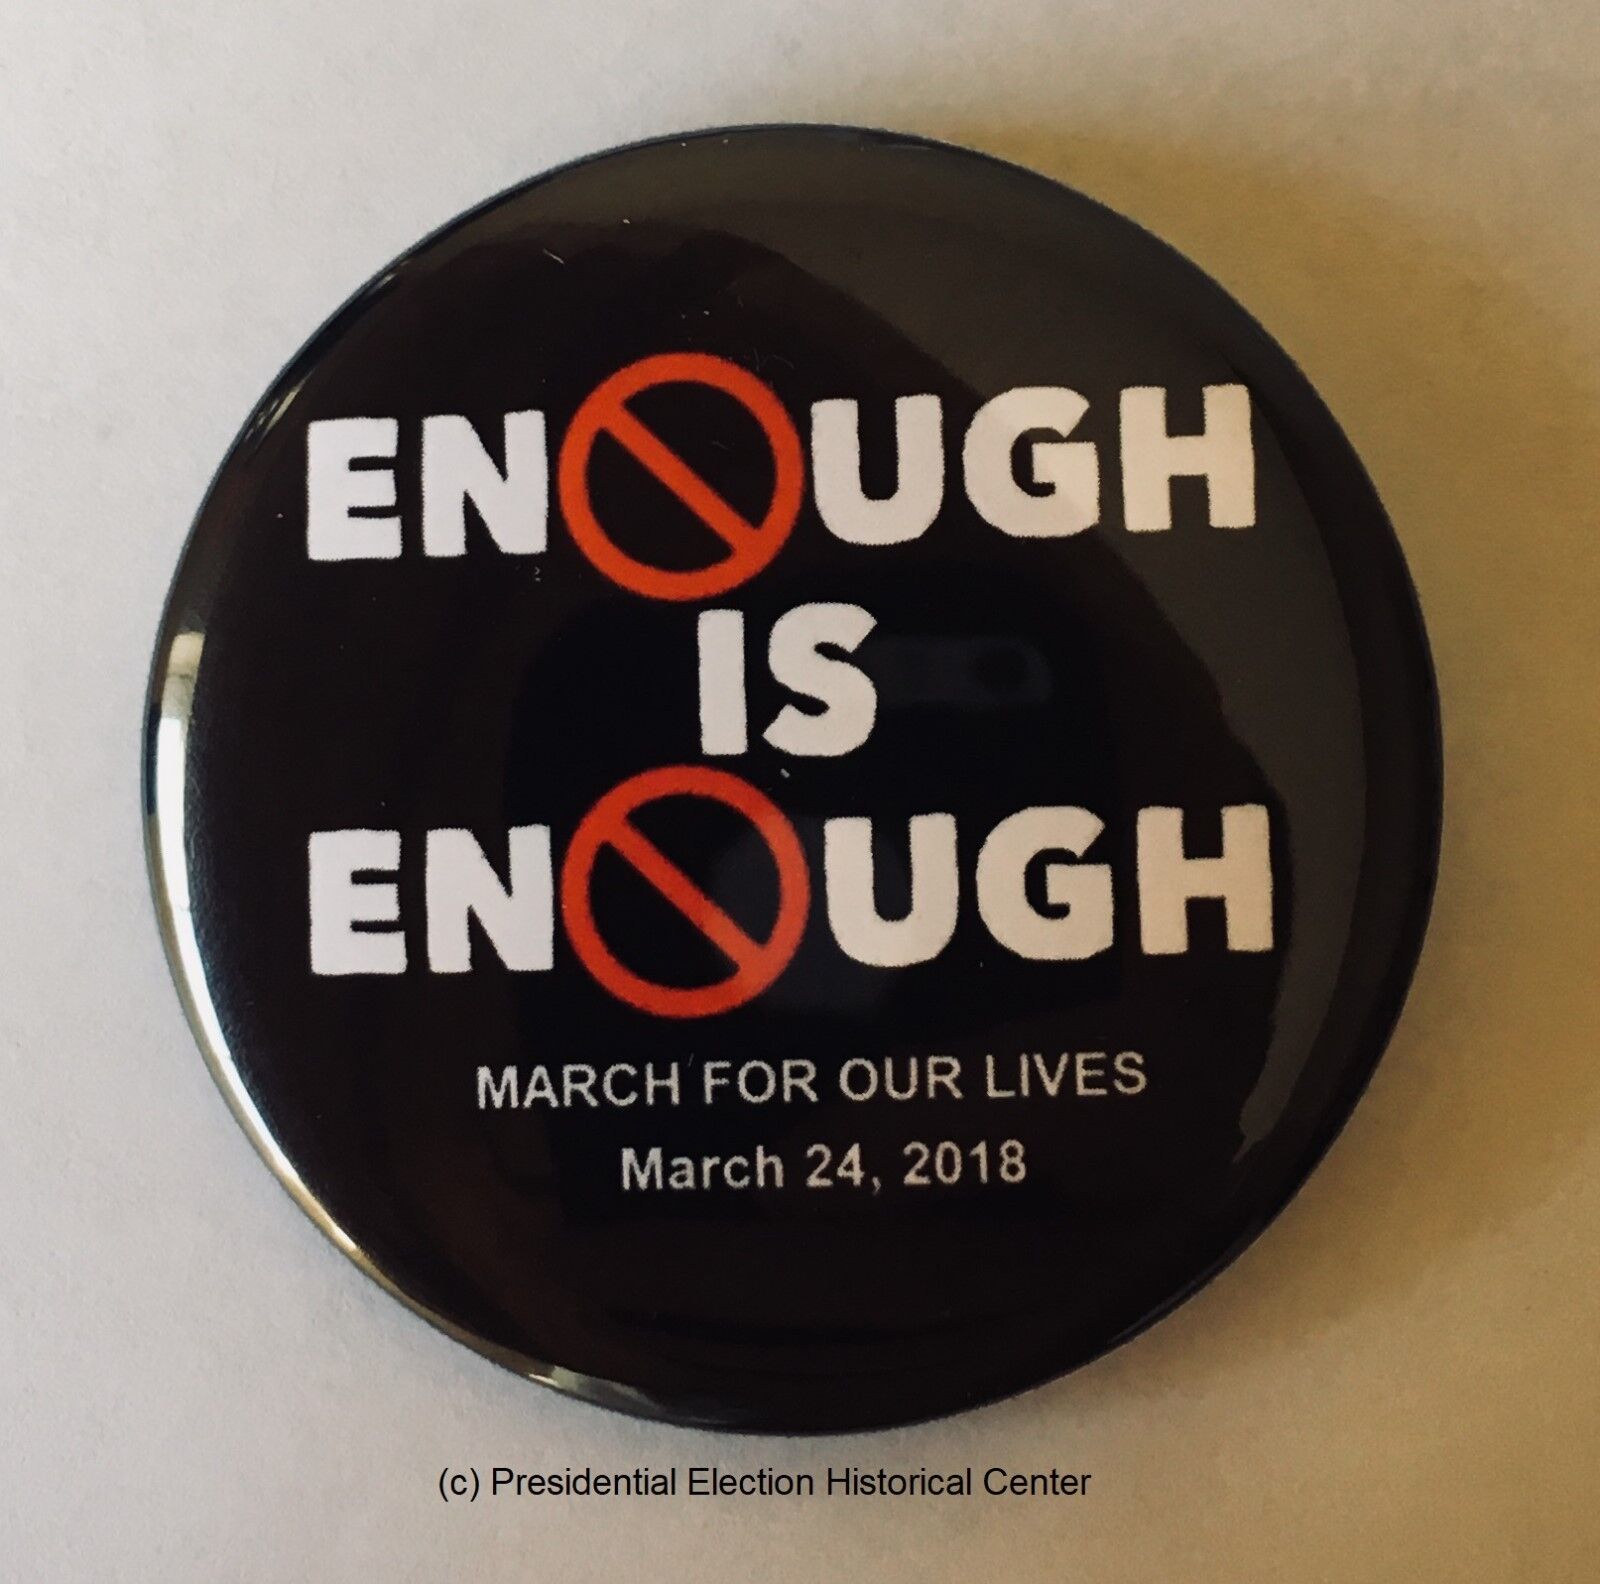 March for Our Lives Enough is Enough button (GNCON-704)